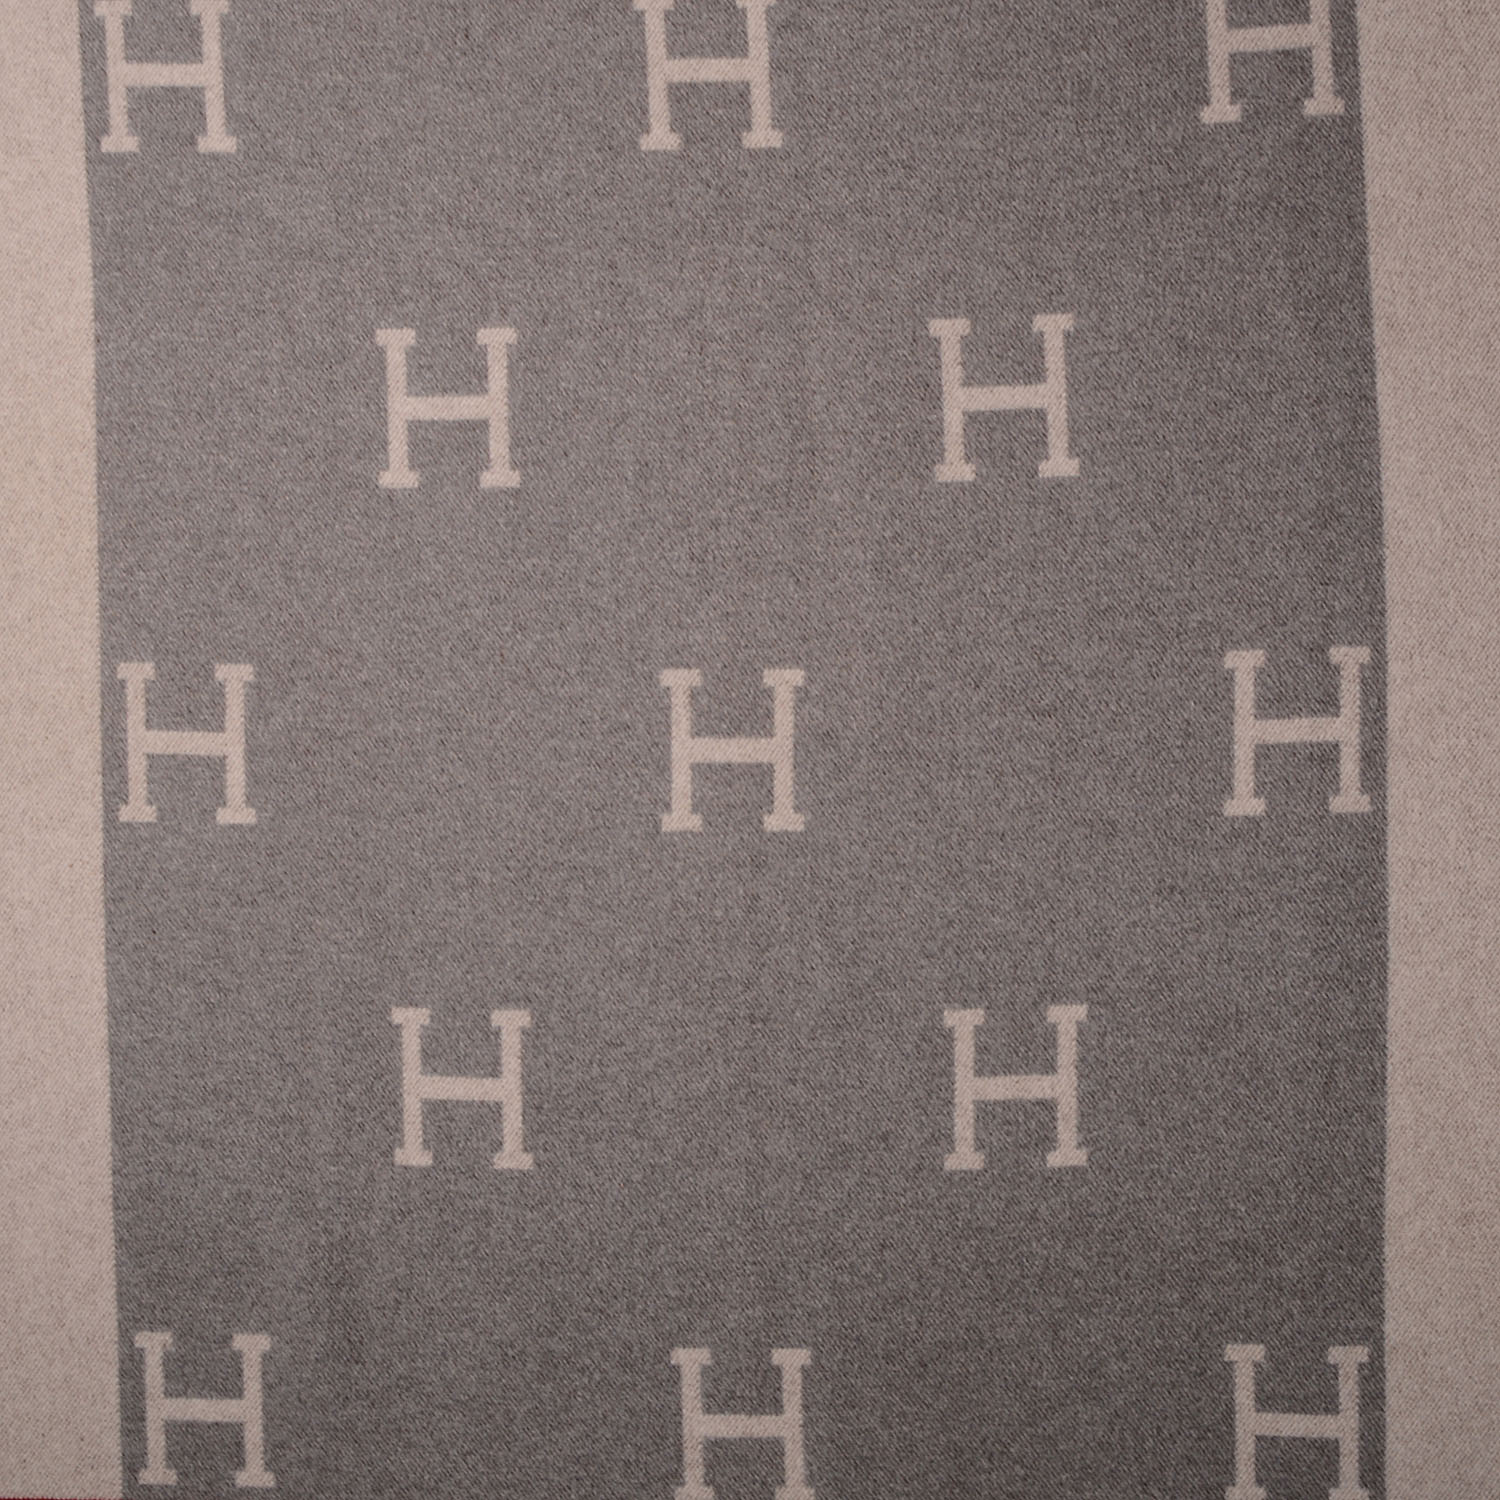 HERMES Wool Cashmere Signature Avalon Blanket Grey 66449 FASHIONPHILE